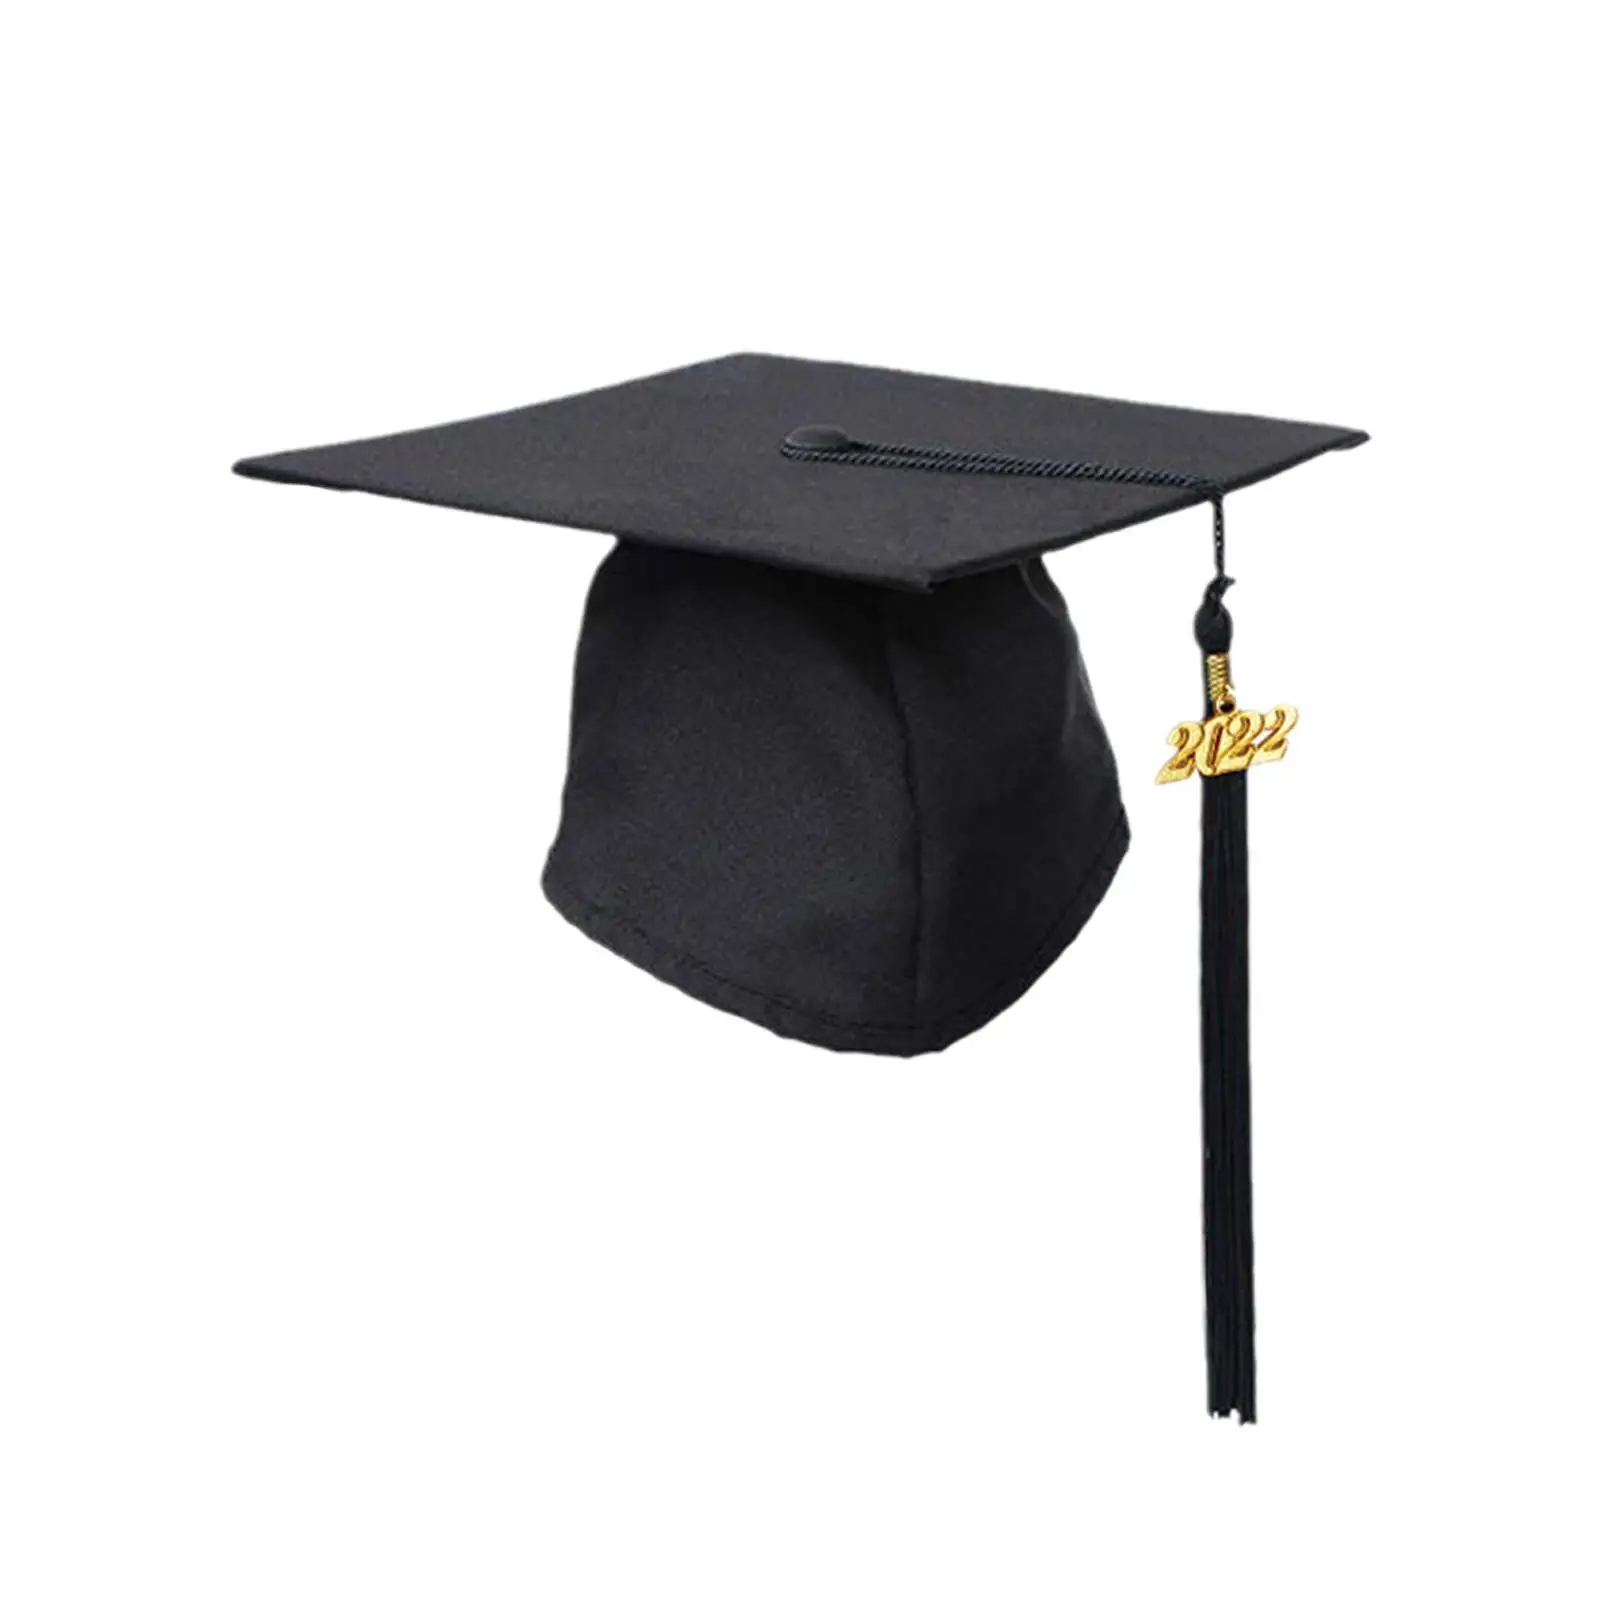 2022 Unisex Adult Bachelor Graduation Caps With Tassels University Bachelors Master Doctor Academic Hat Mortar Board